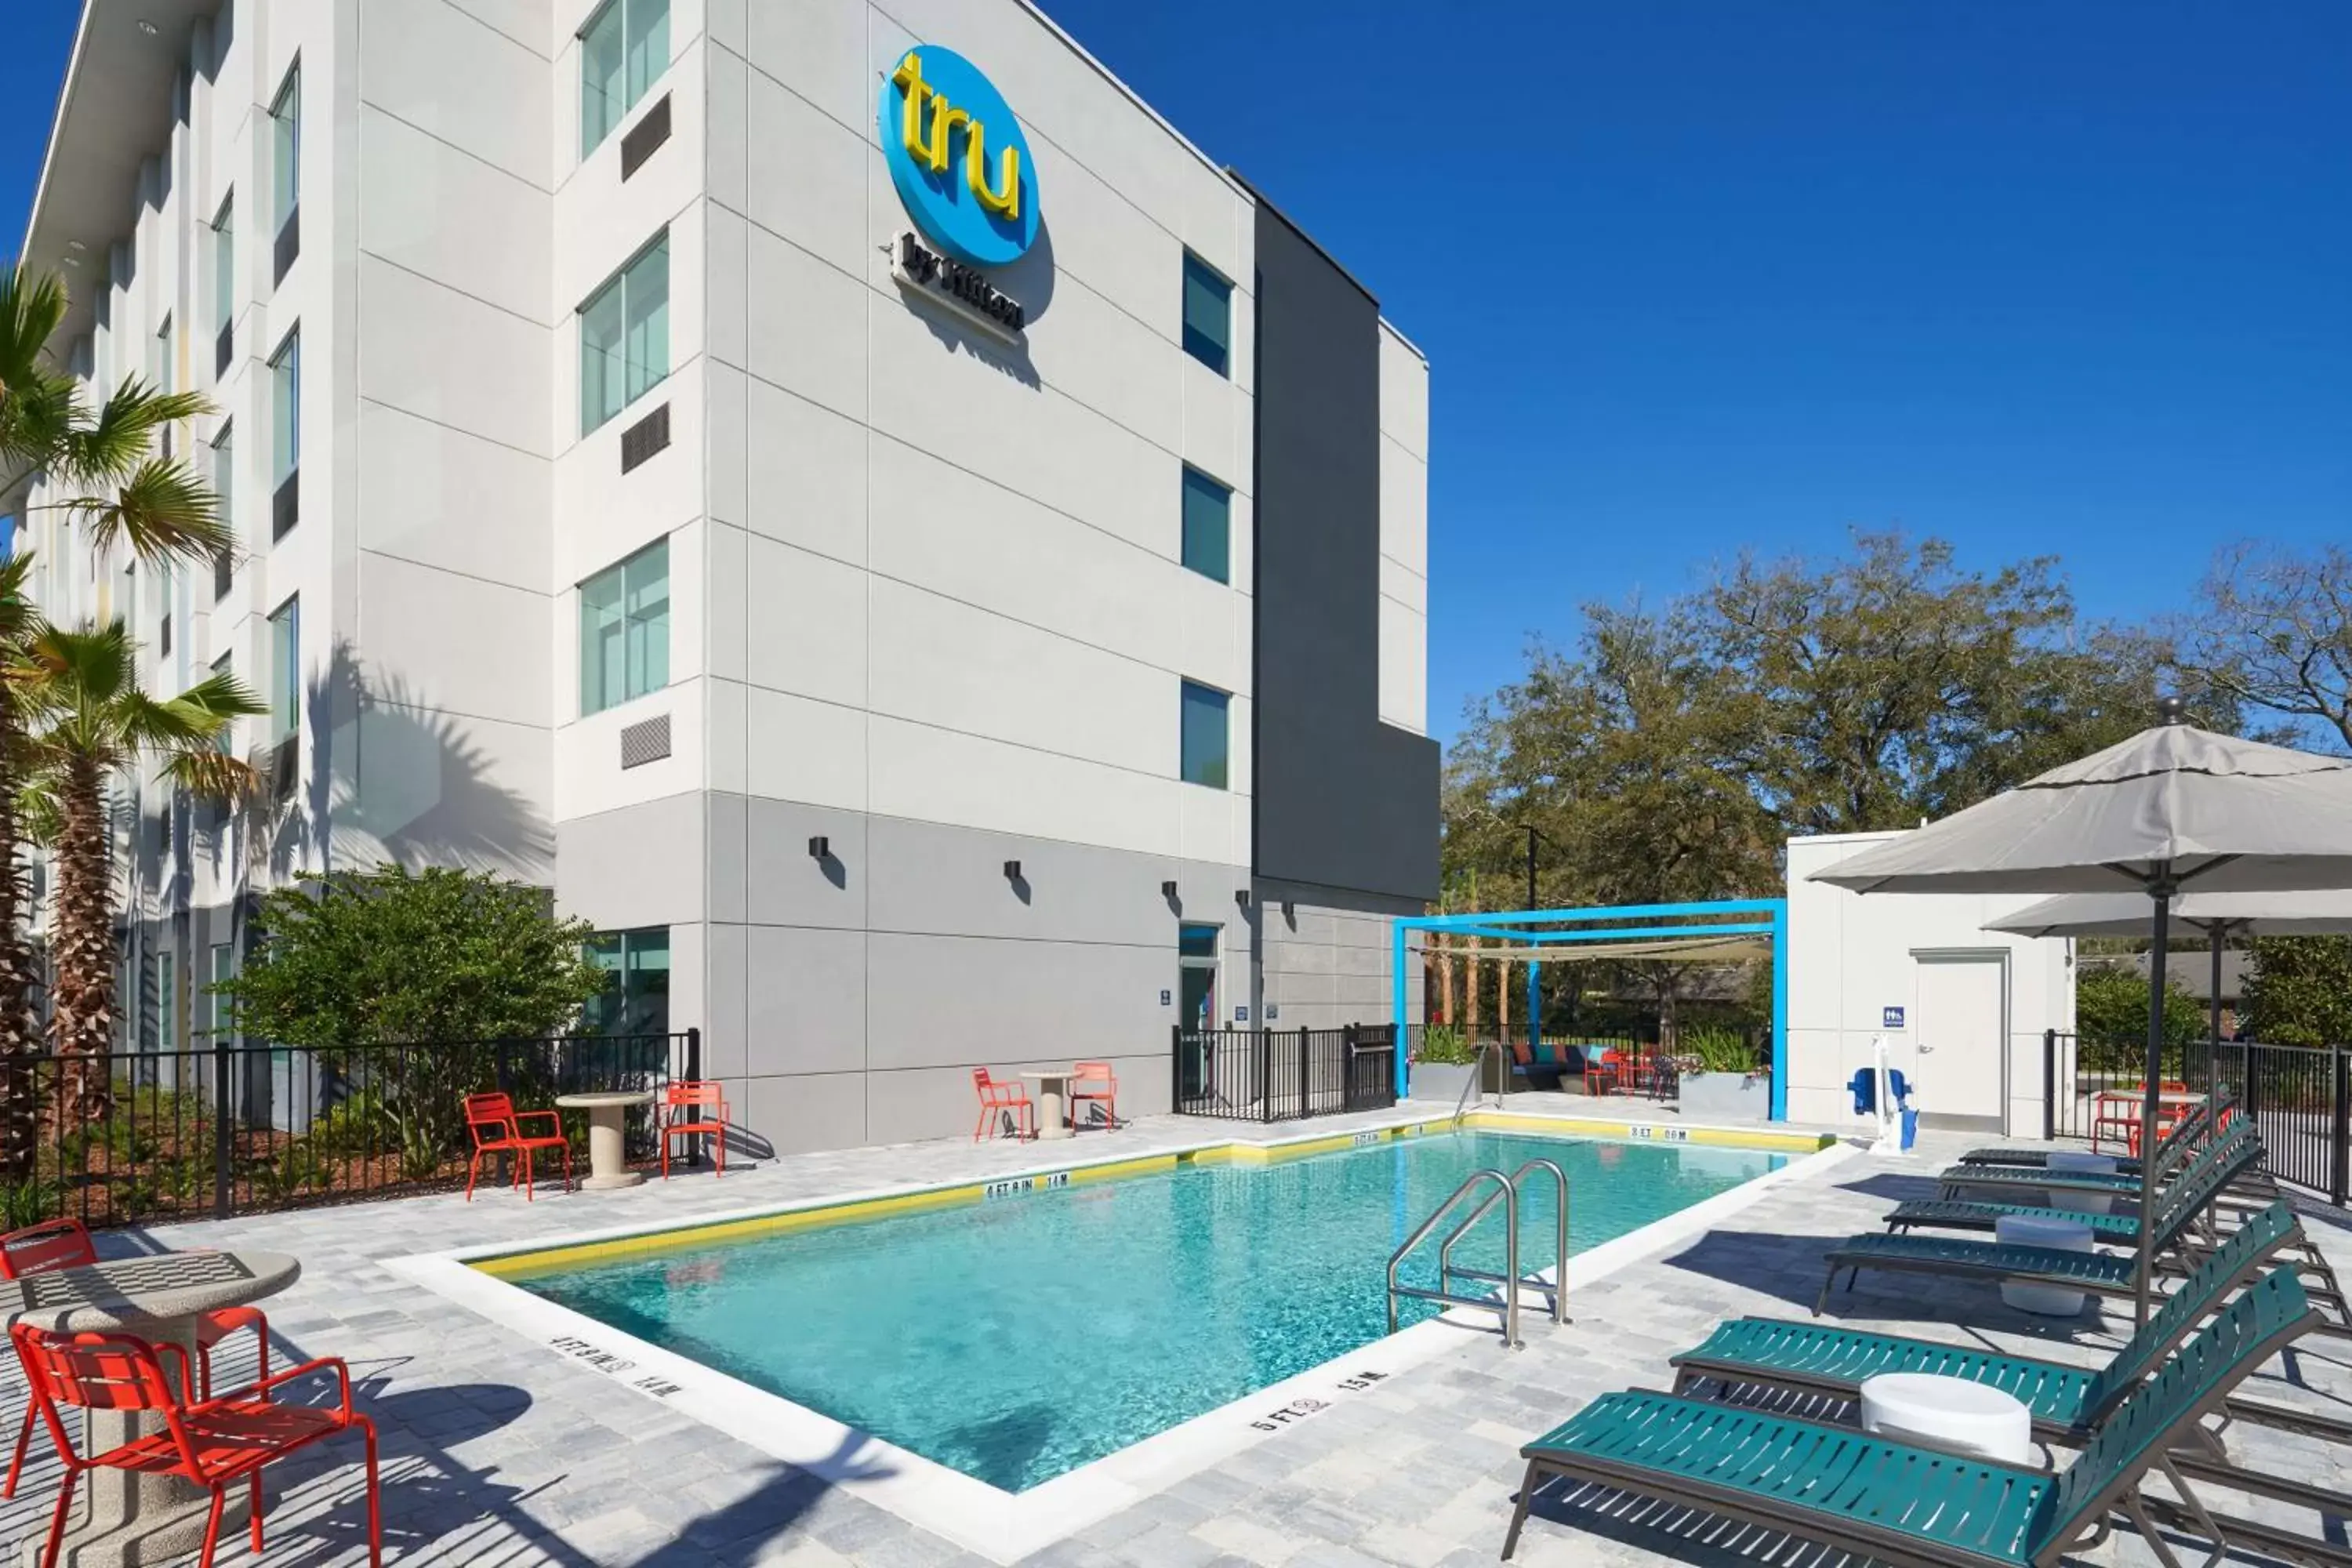 Pool view, Swimming Pool in Tru By Hilton Jacksonville South Mandarin, Fl